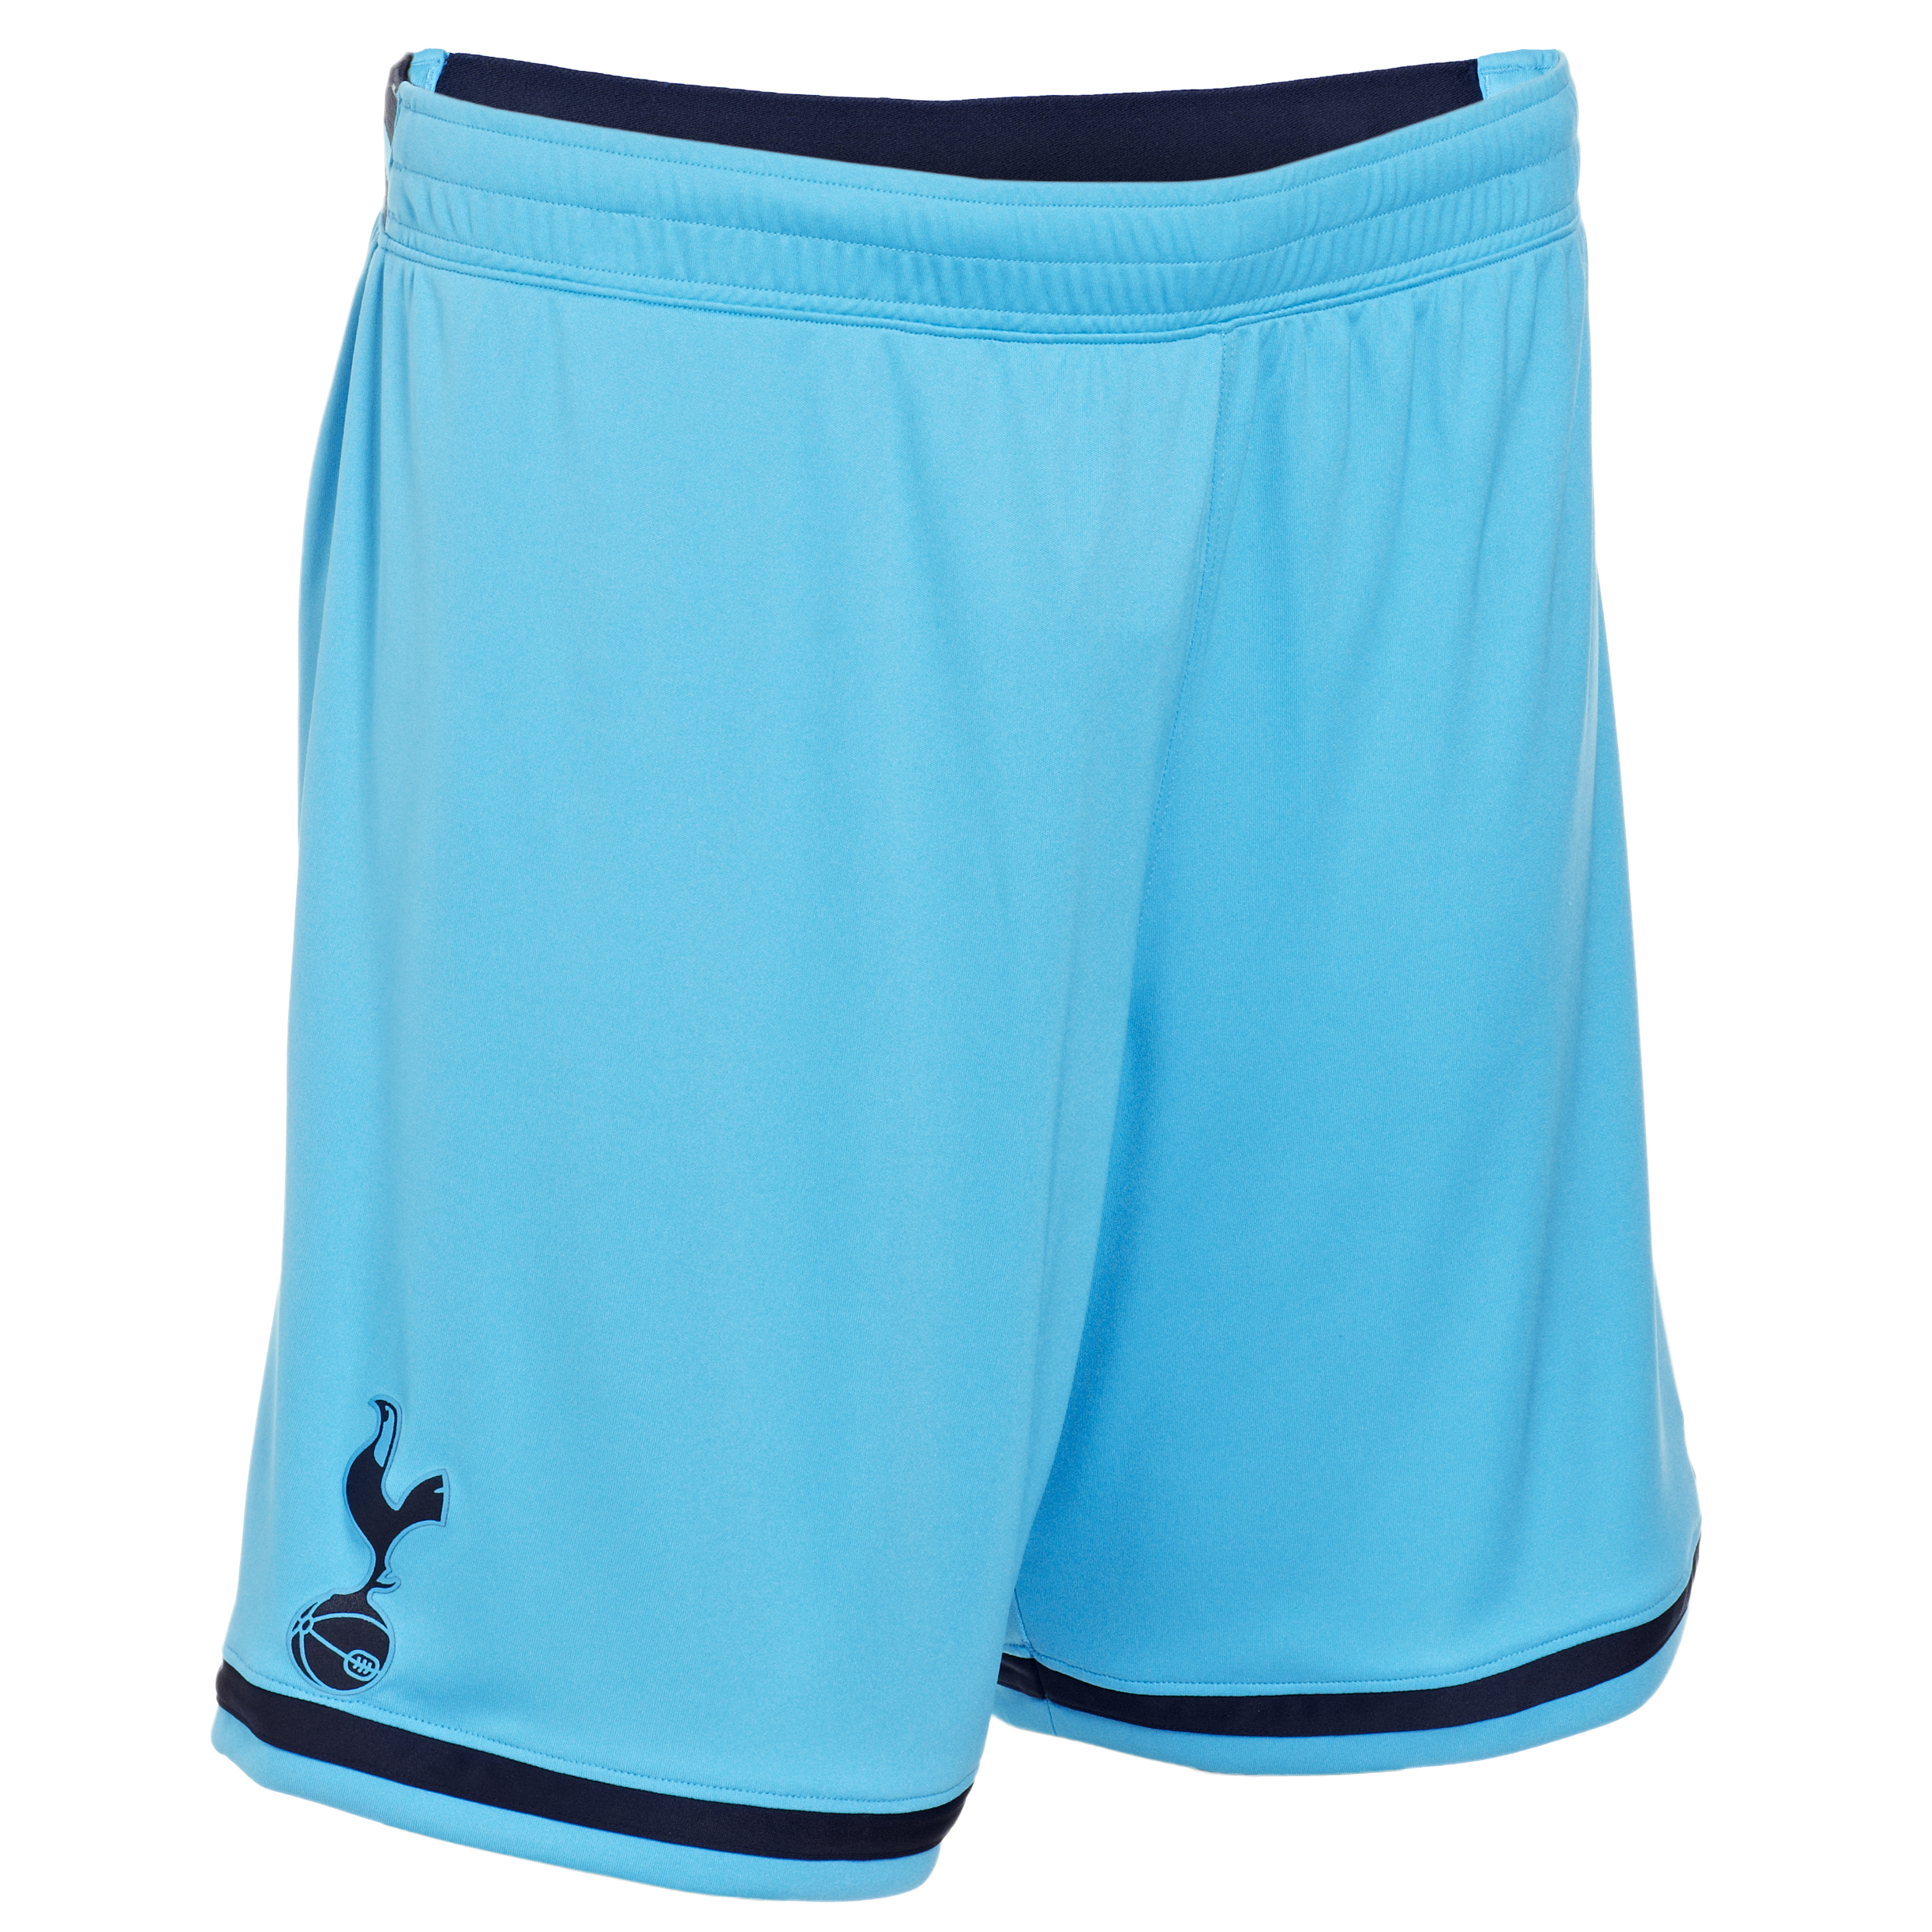 Tottenham Hotspur Away Shorts 2013/14 - Youths